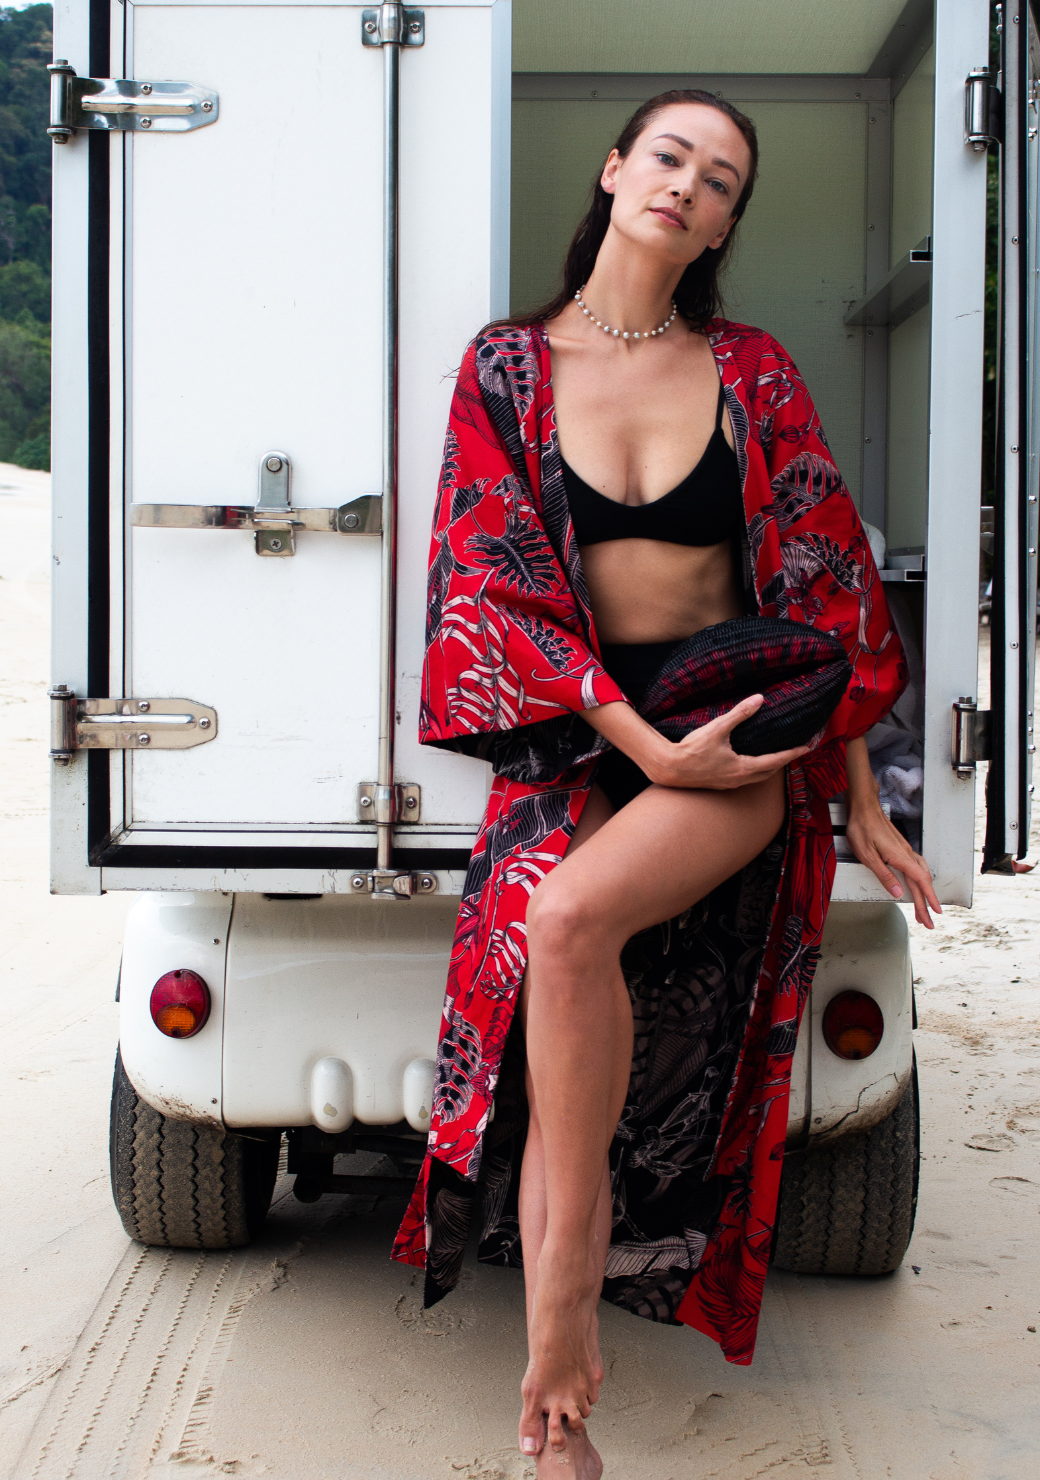 Reversible Long Cotton Kimono Robe in Tropical Foliage in Red & Black